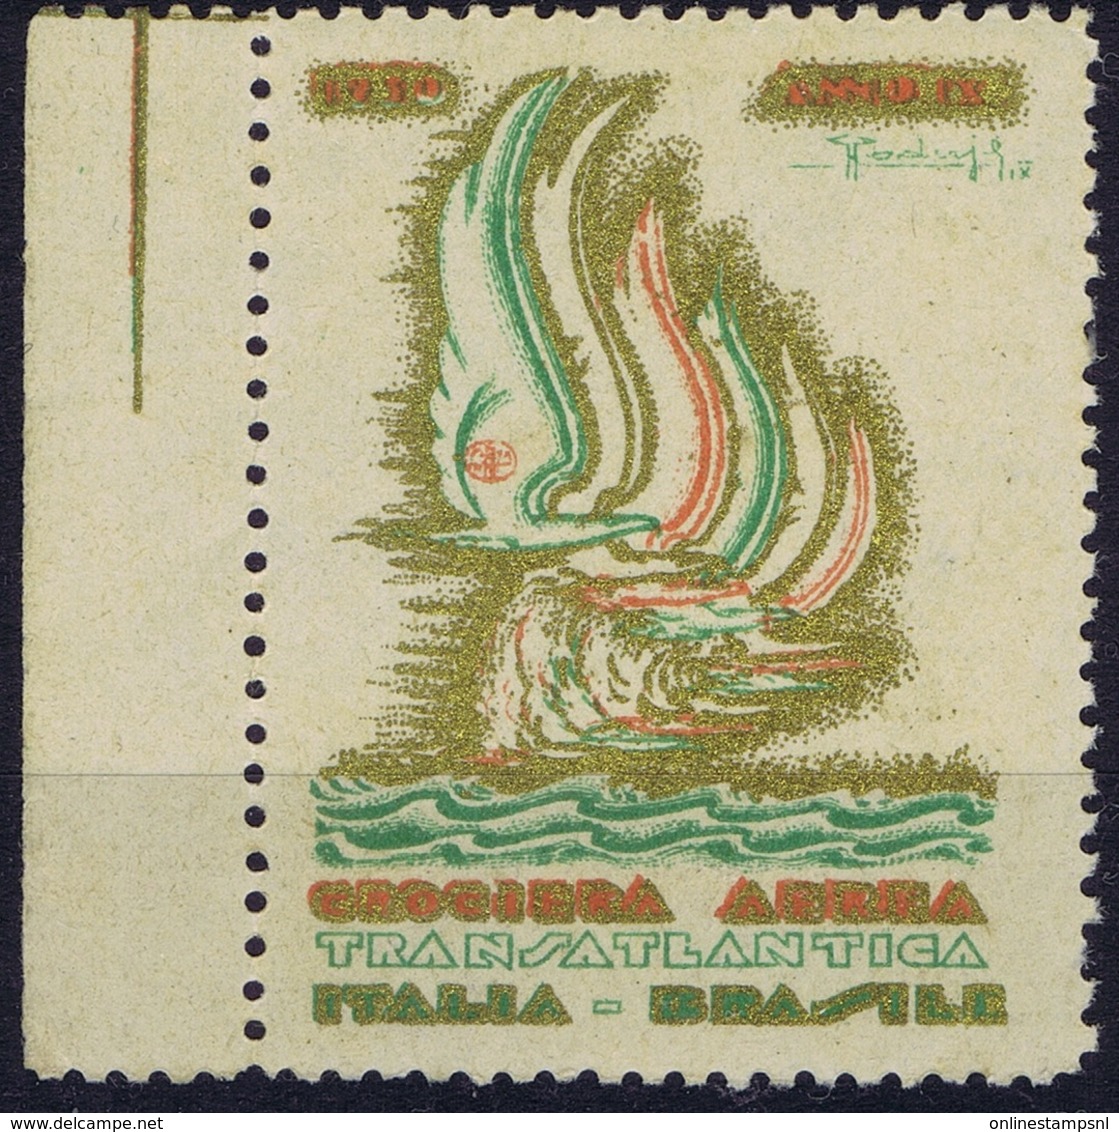 ITALY 1930 AVIAZIONE FASCISMO PROPAGANDA CEOCIERA AEREA TRANSATLANTIQUE ITALIA - BRASILE - Airmail